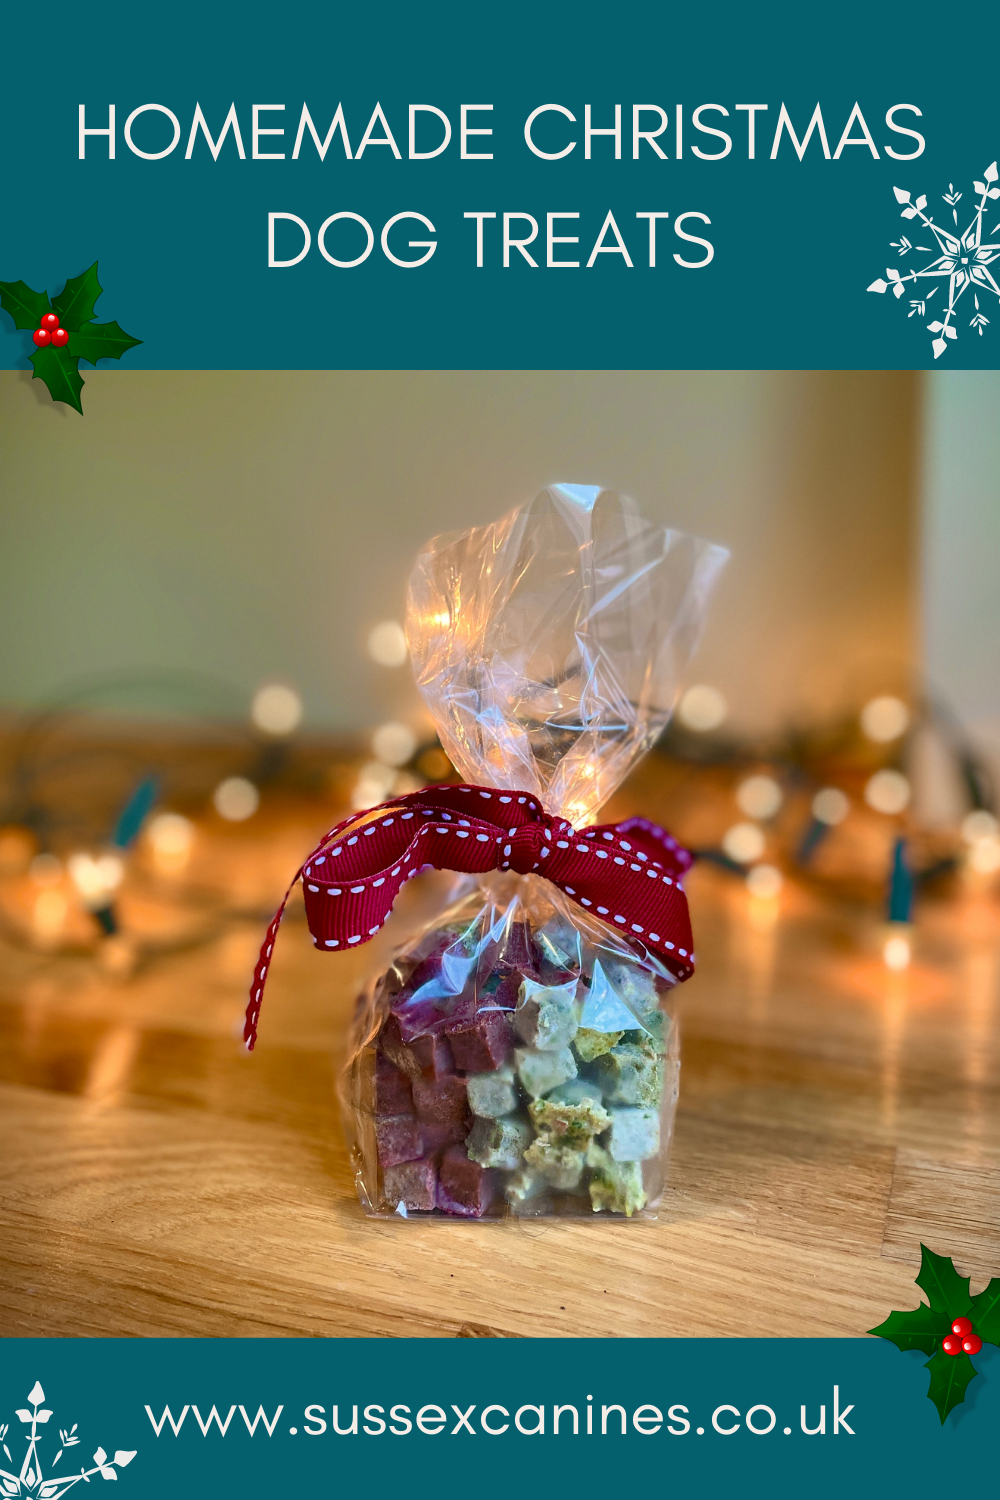 Christmas dog treat gift ideas